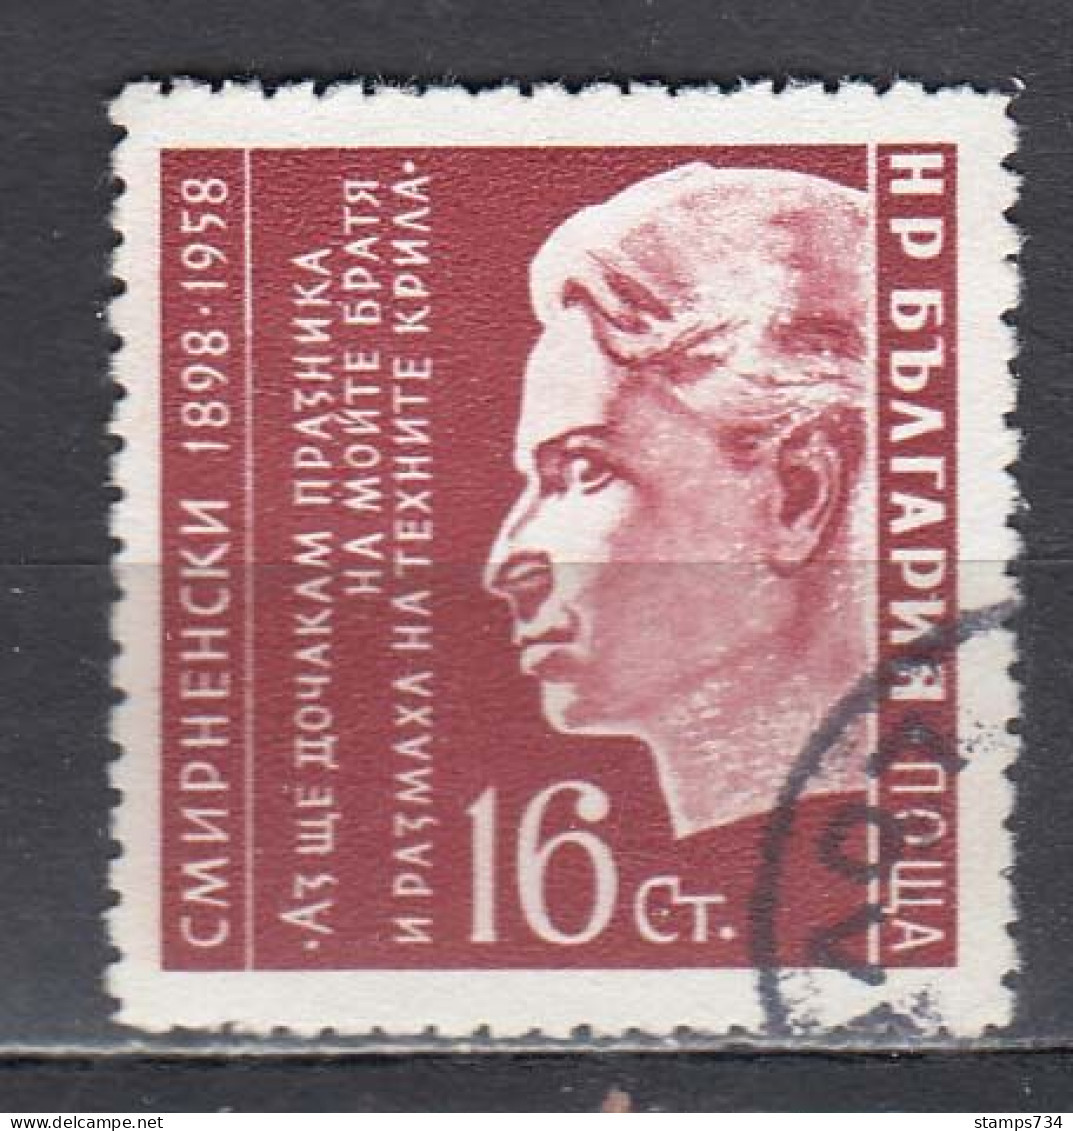 Bulgaria 1958 - Christo Smirnenski, Poete, Mi-Nr. 1093, Used - Used Stamps